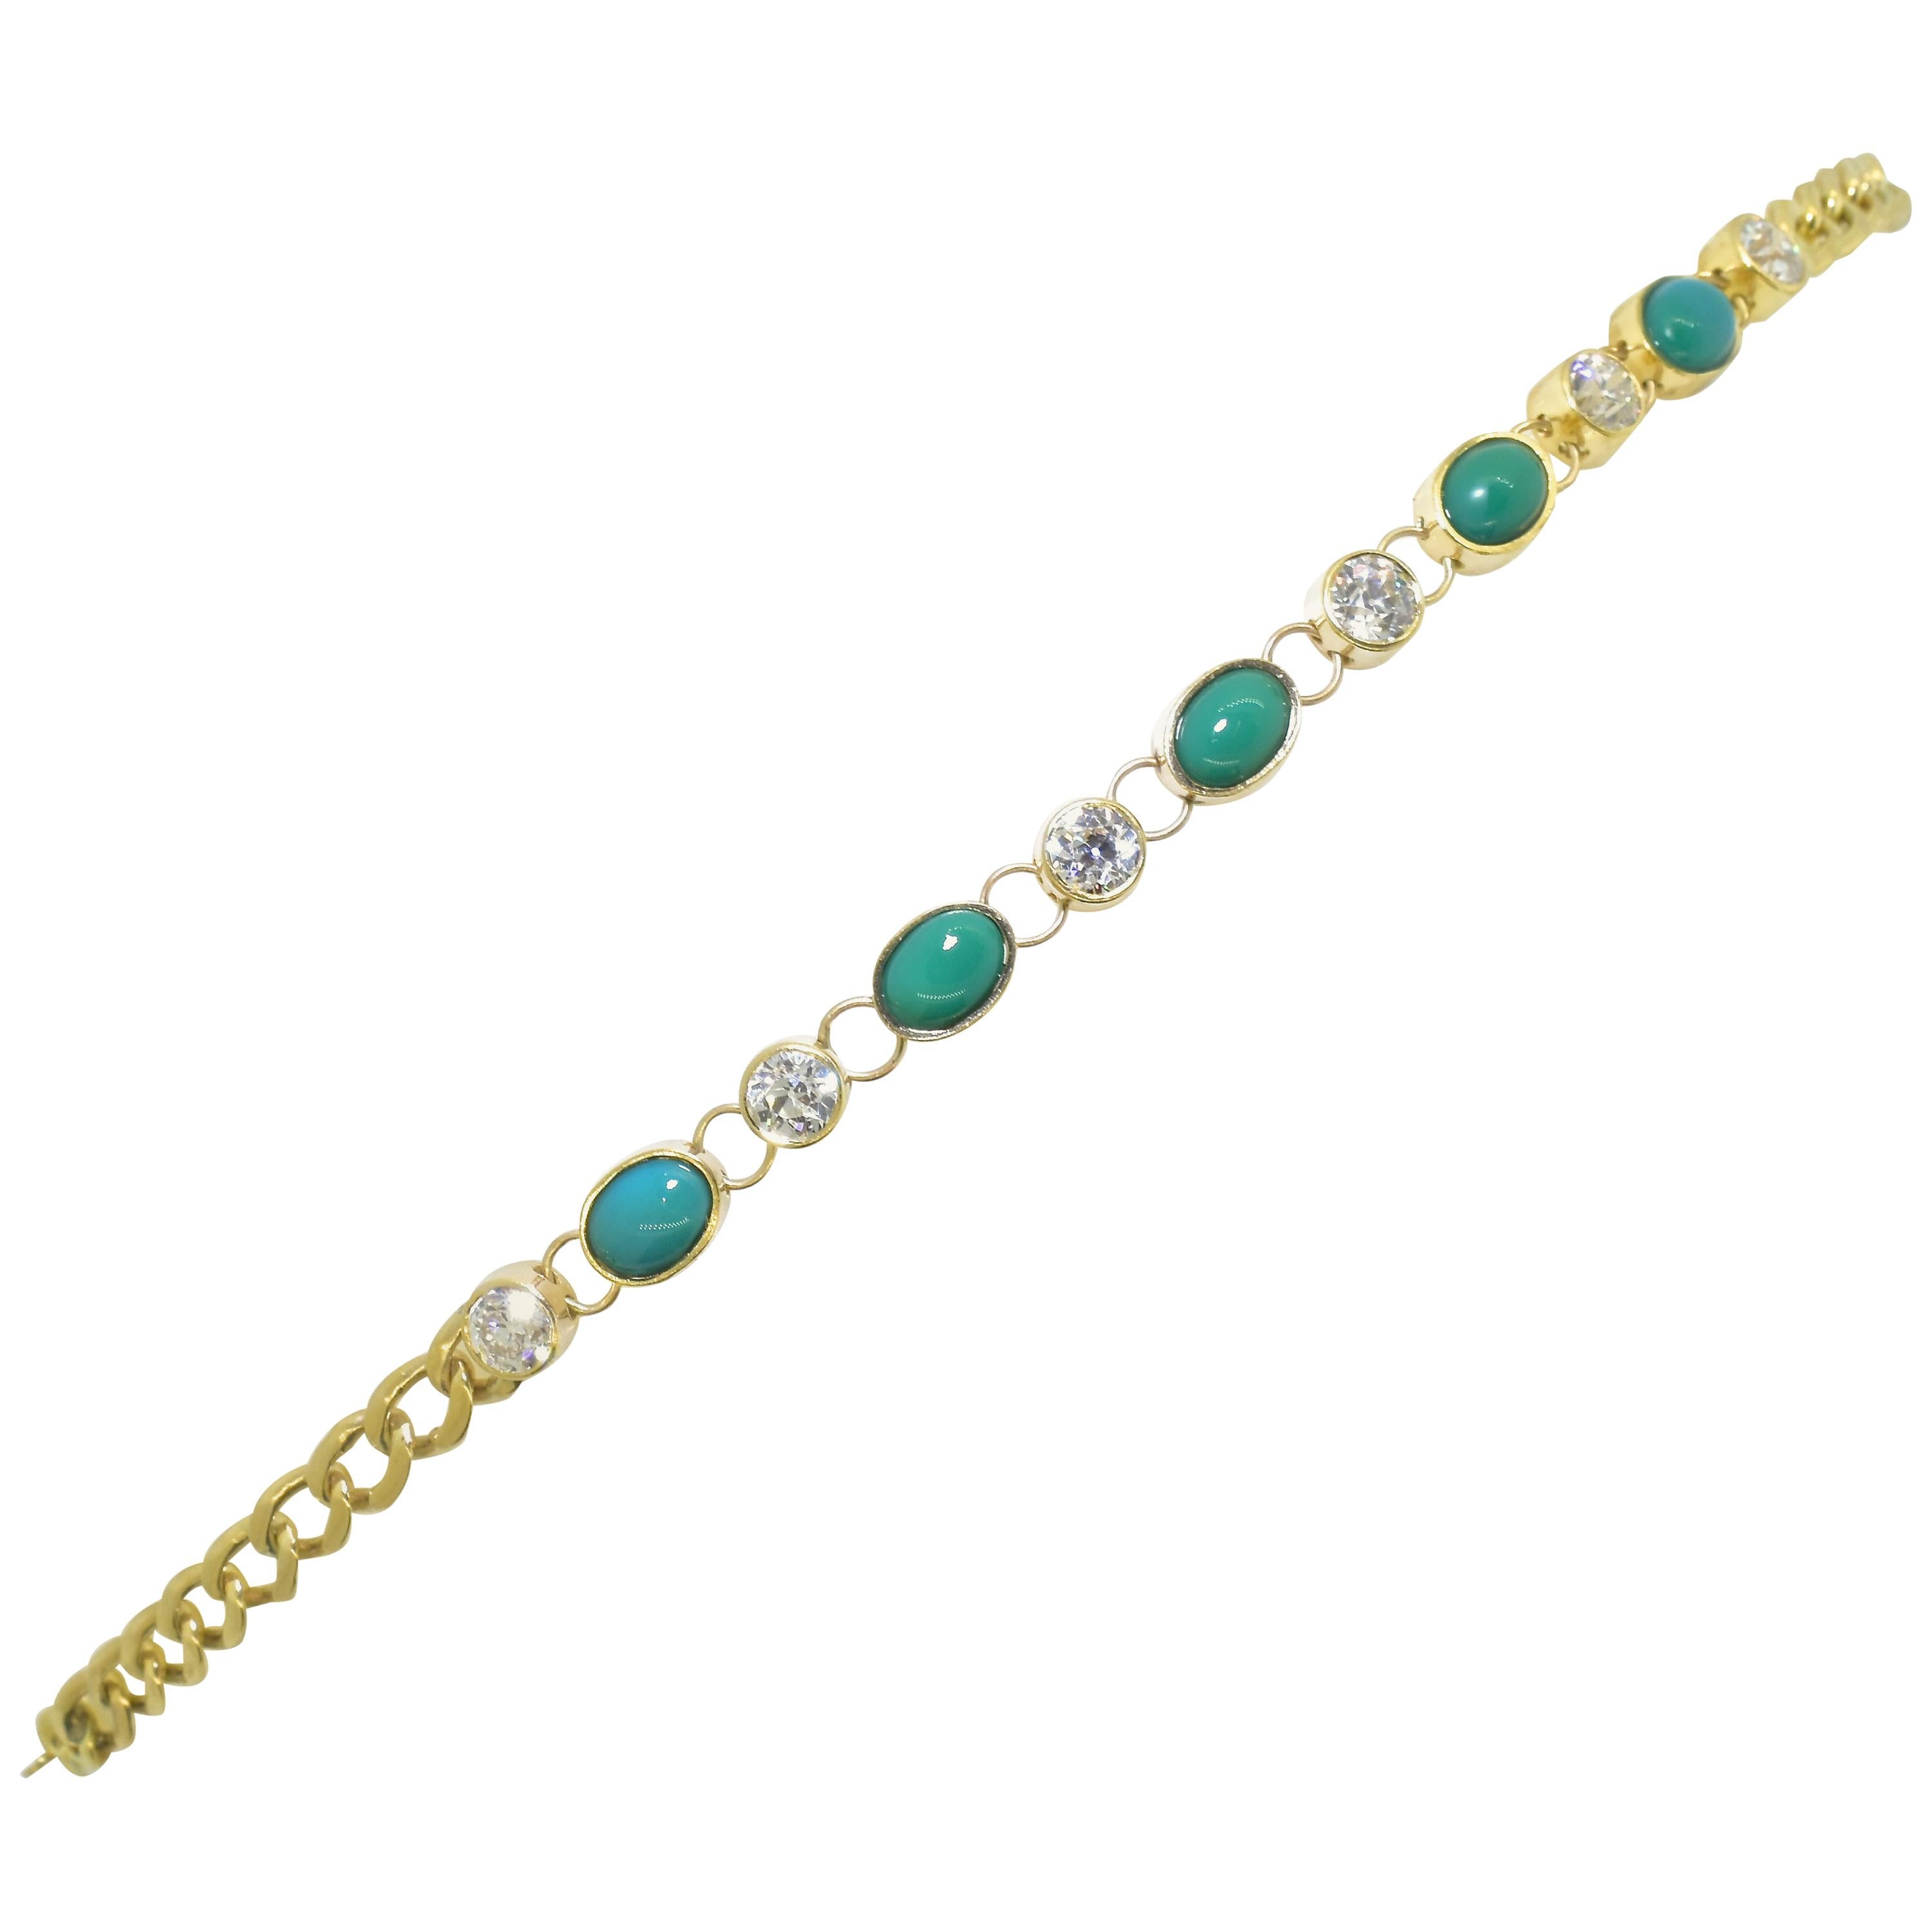 Antique Tiffany & Co. Gold, Diamond and Turquoise Bracelet, circa 1900